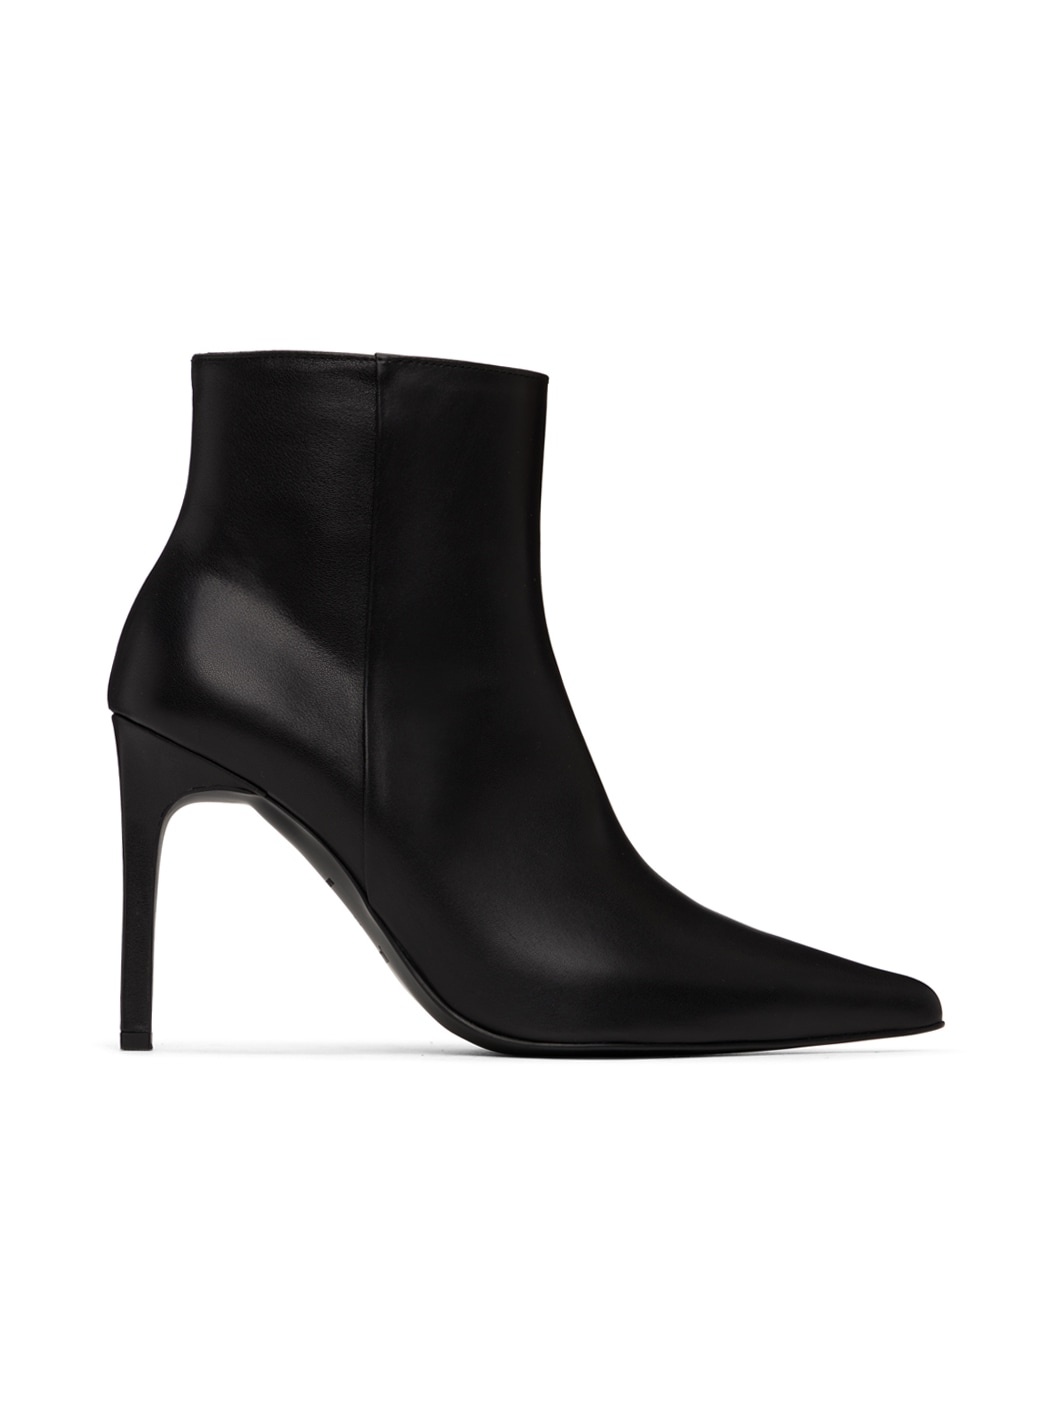 Black Leather Stiletto Boots - 1